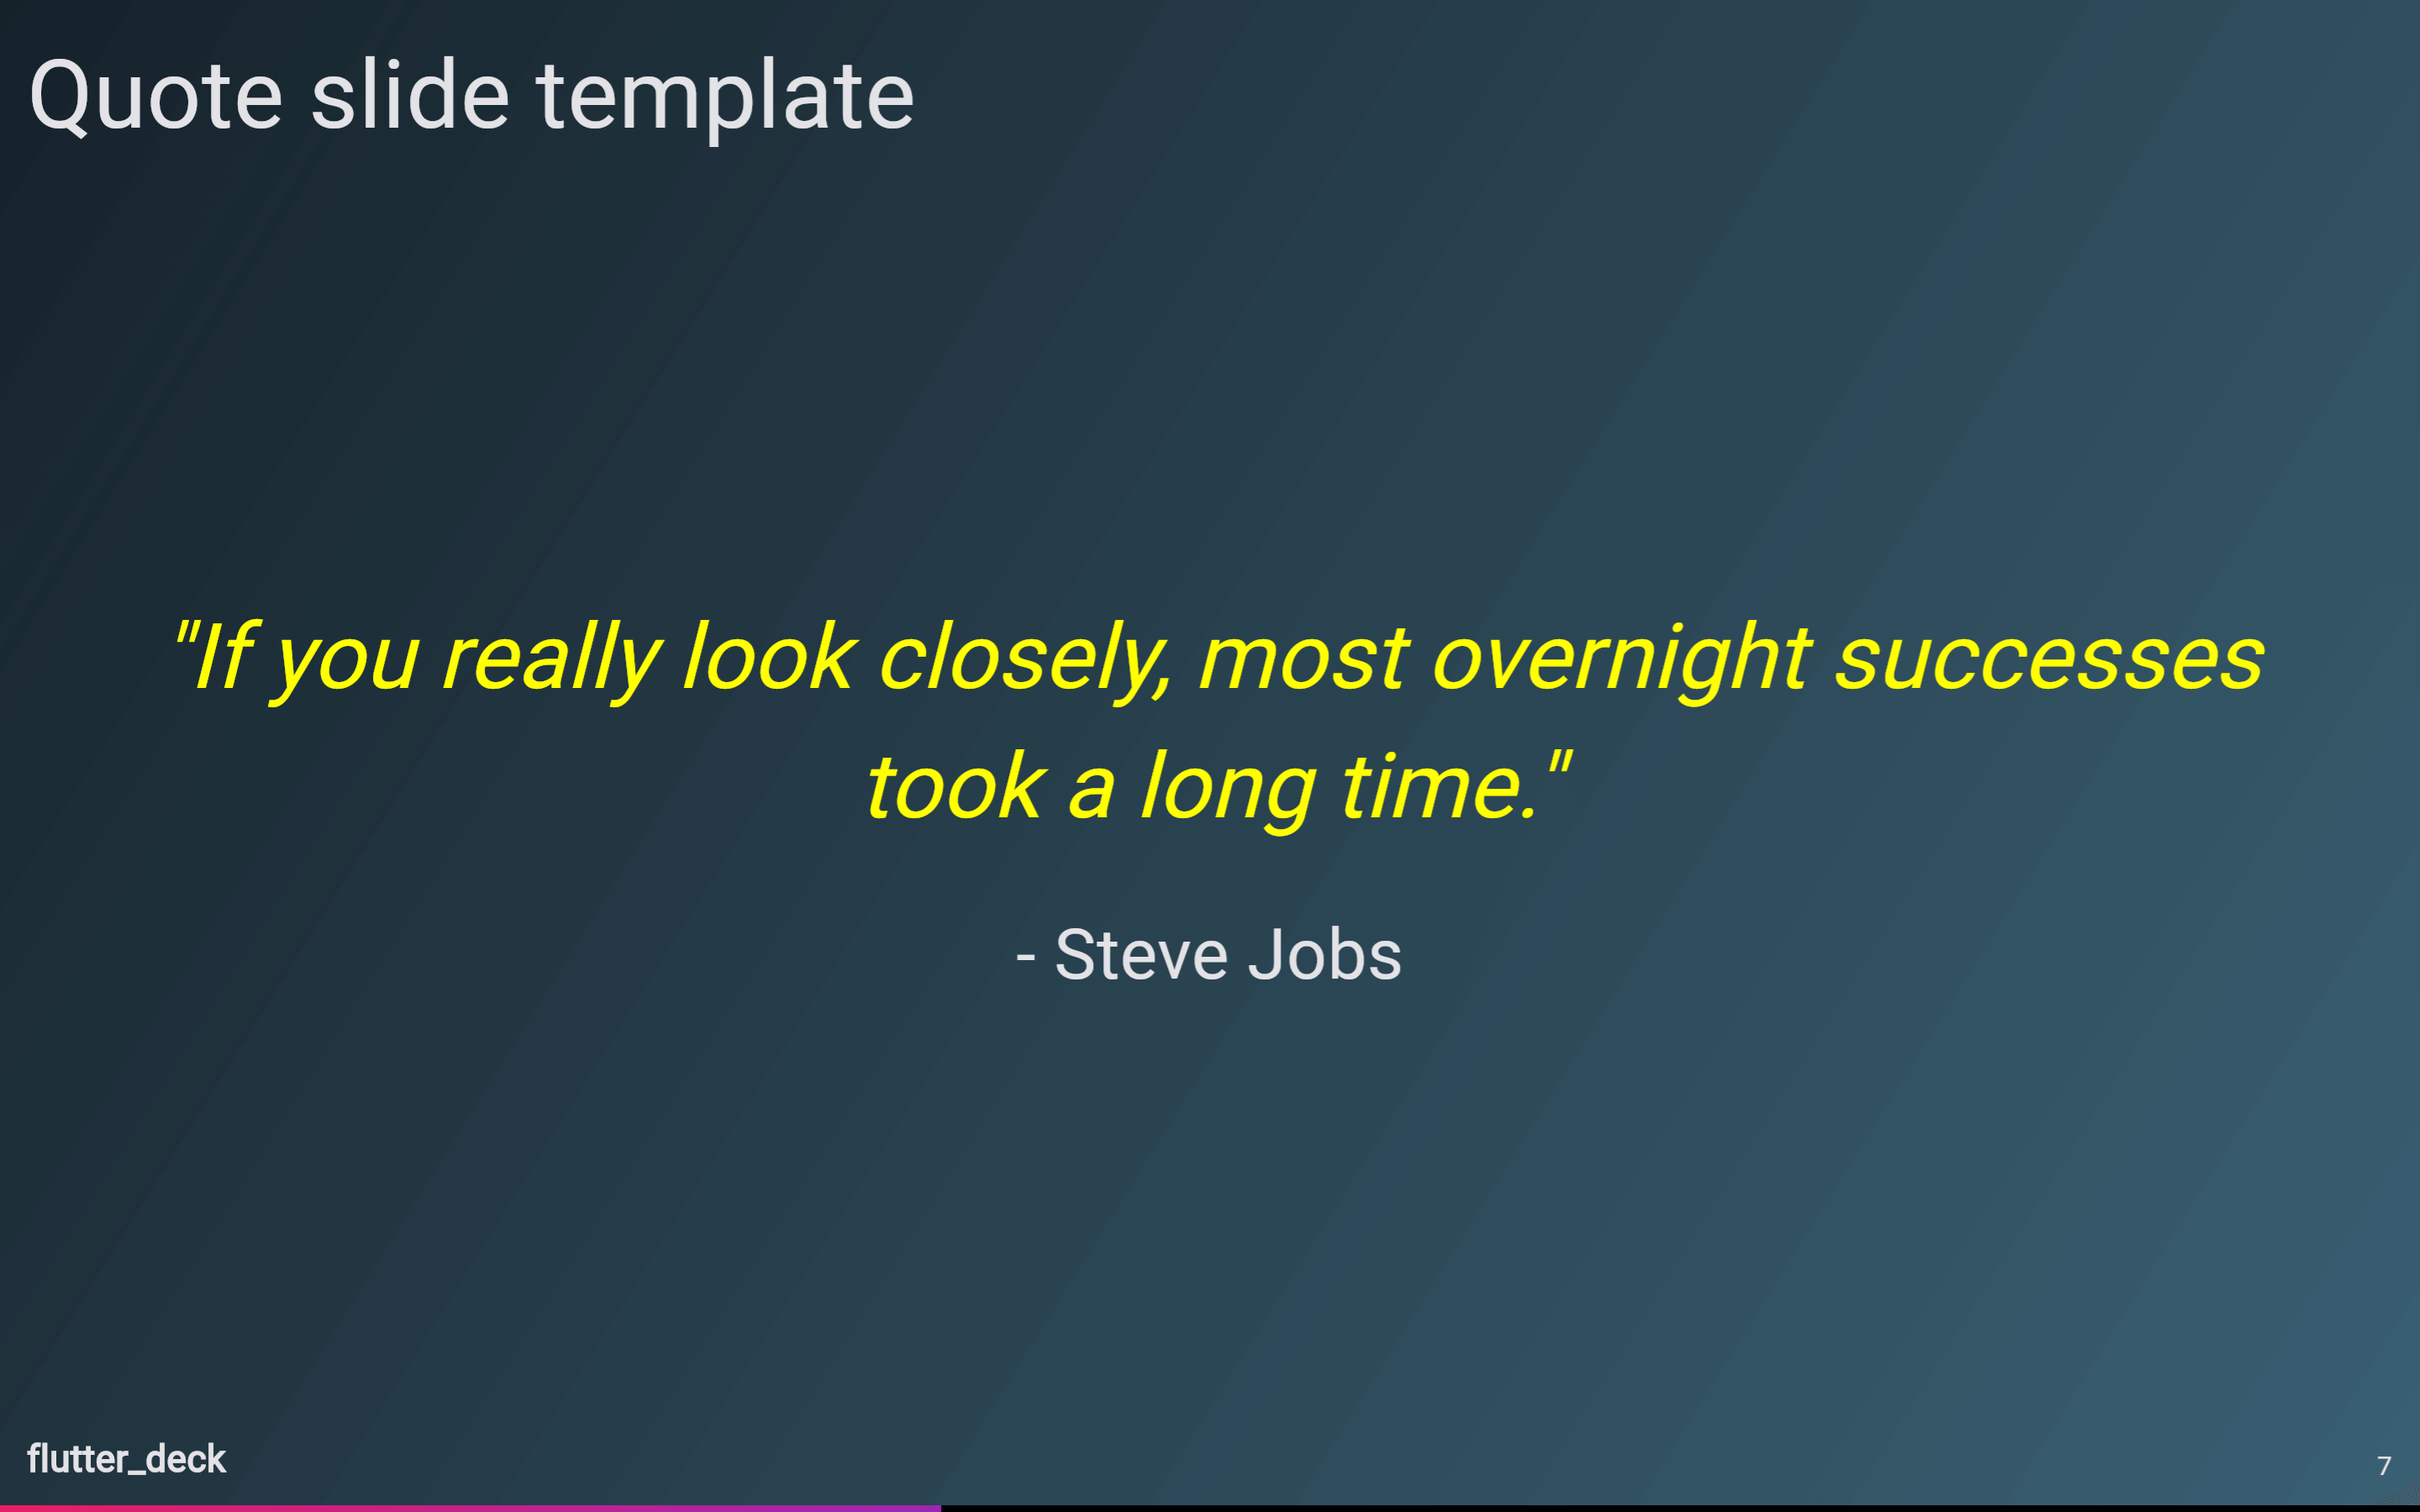 Quote slide example